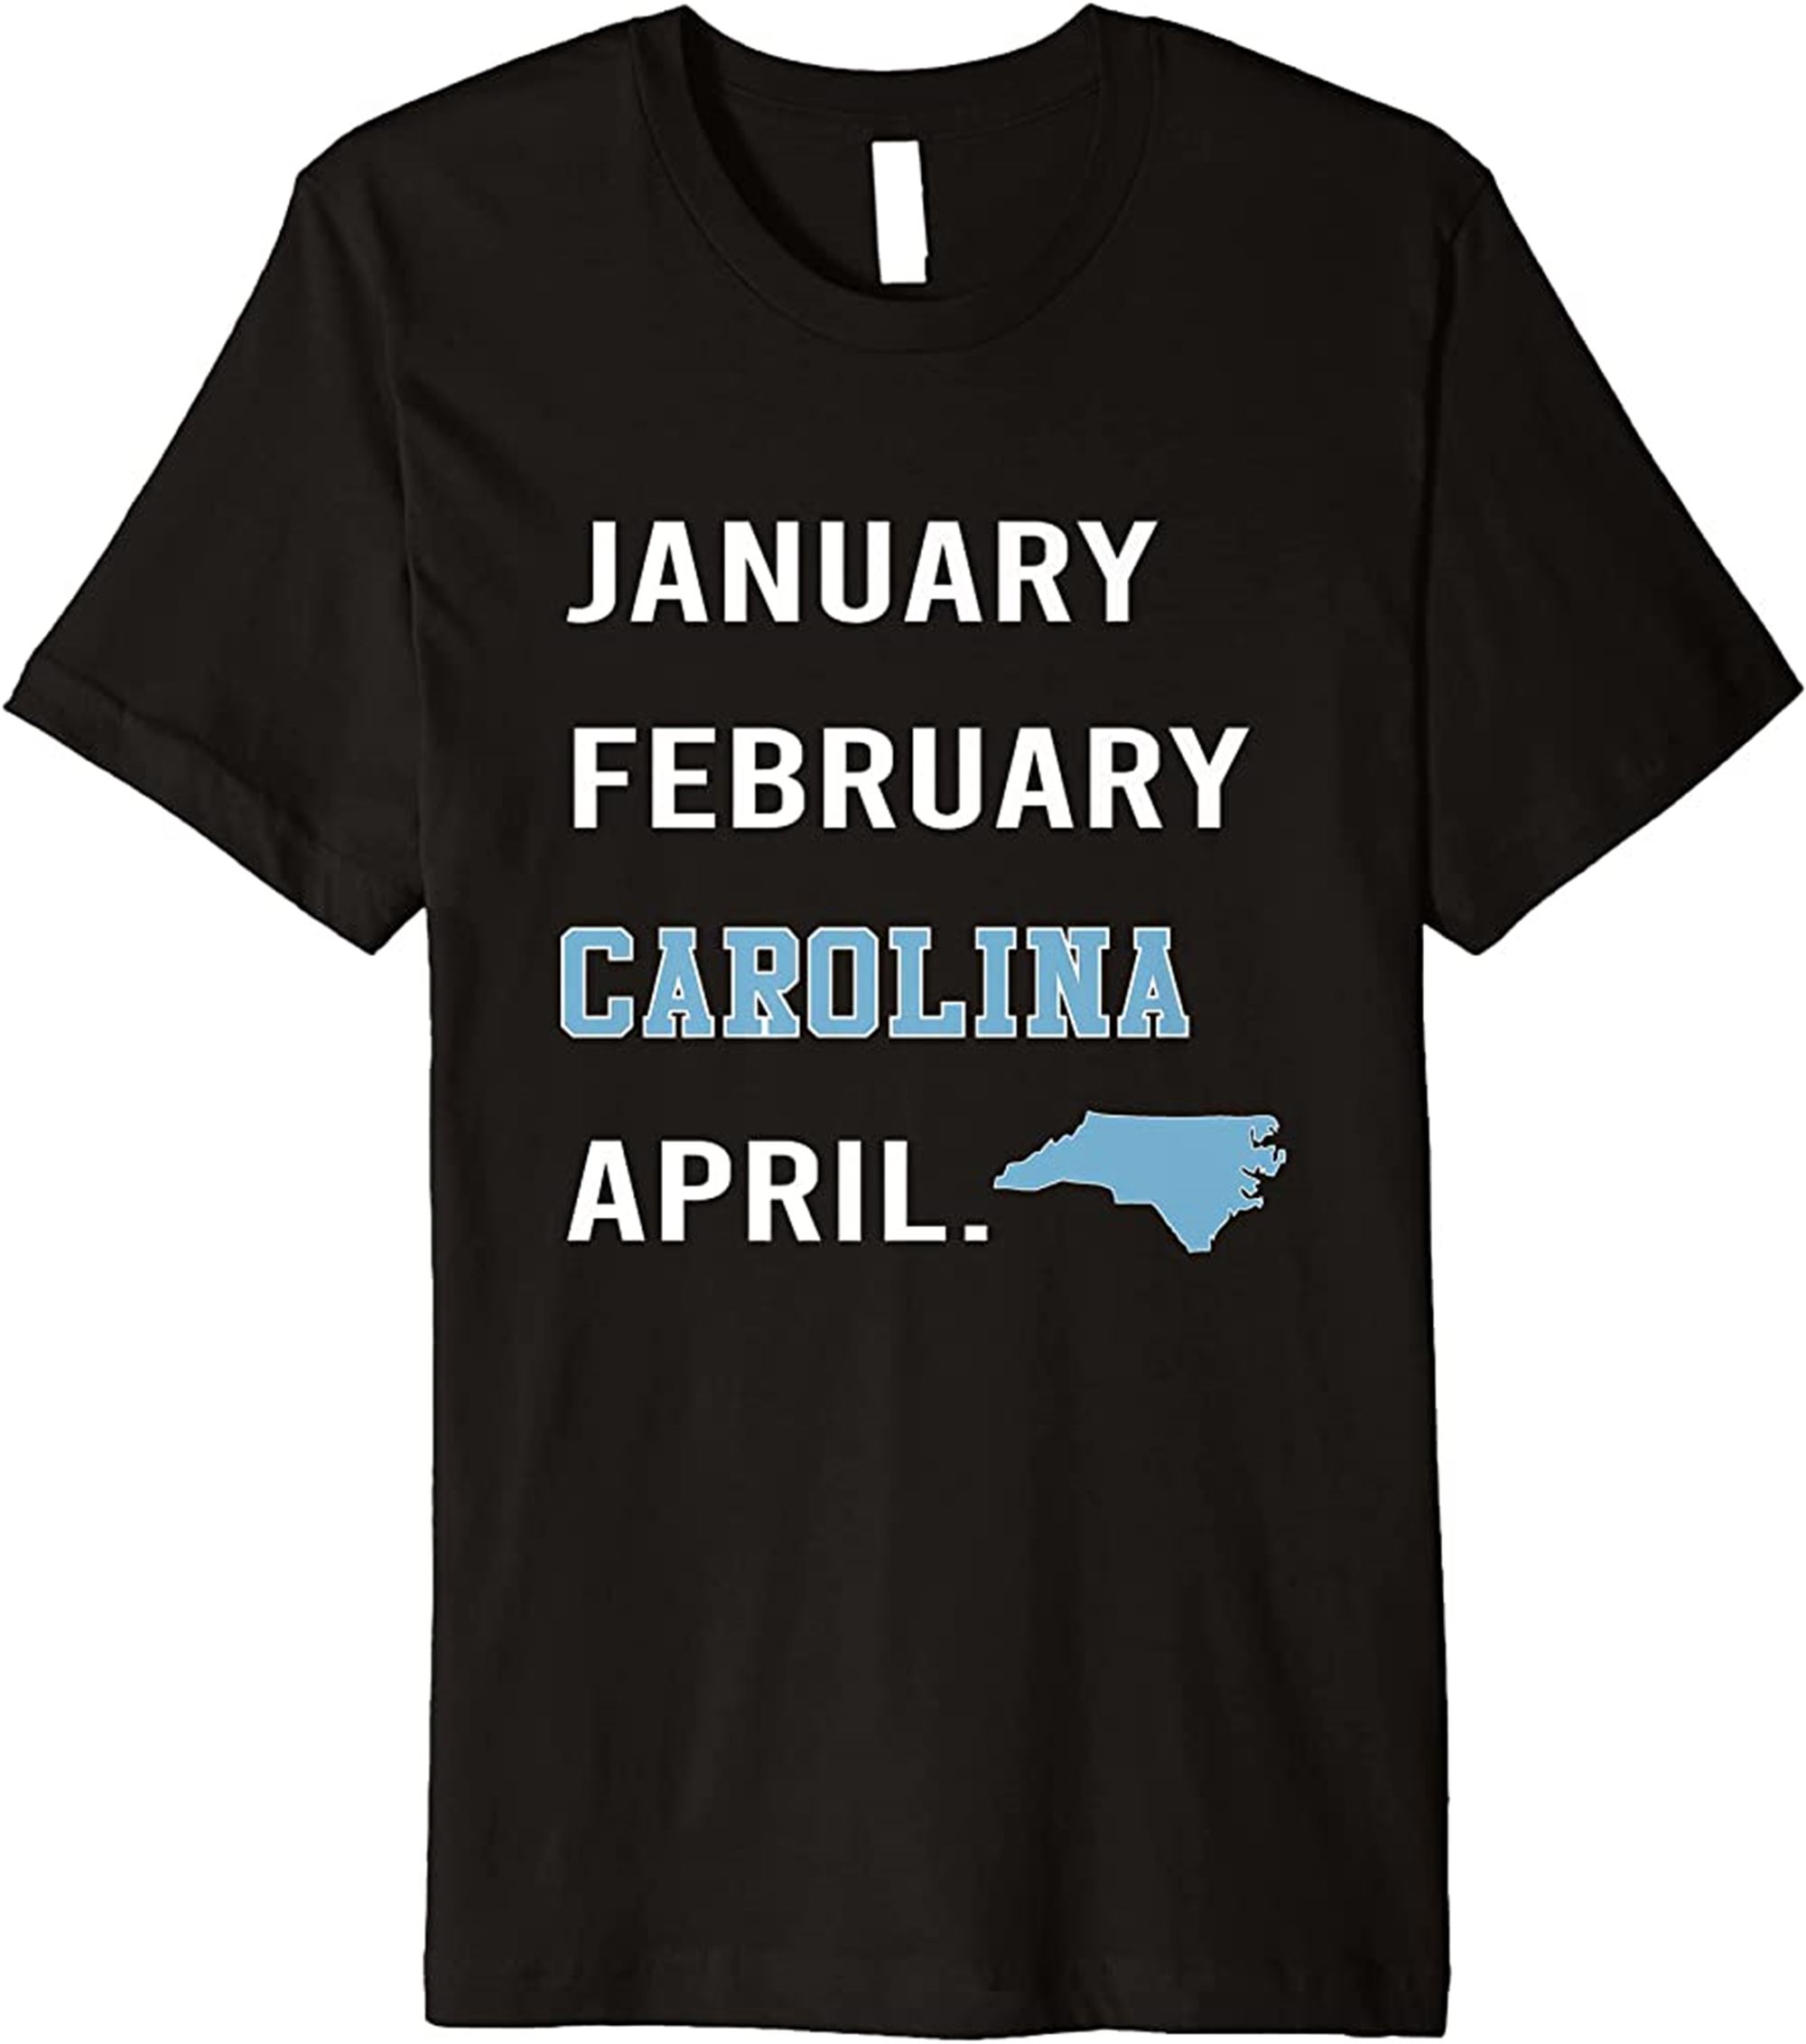 January February Carolina April Carolina Lover Premium T-shirt Full Size Up To 5xl